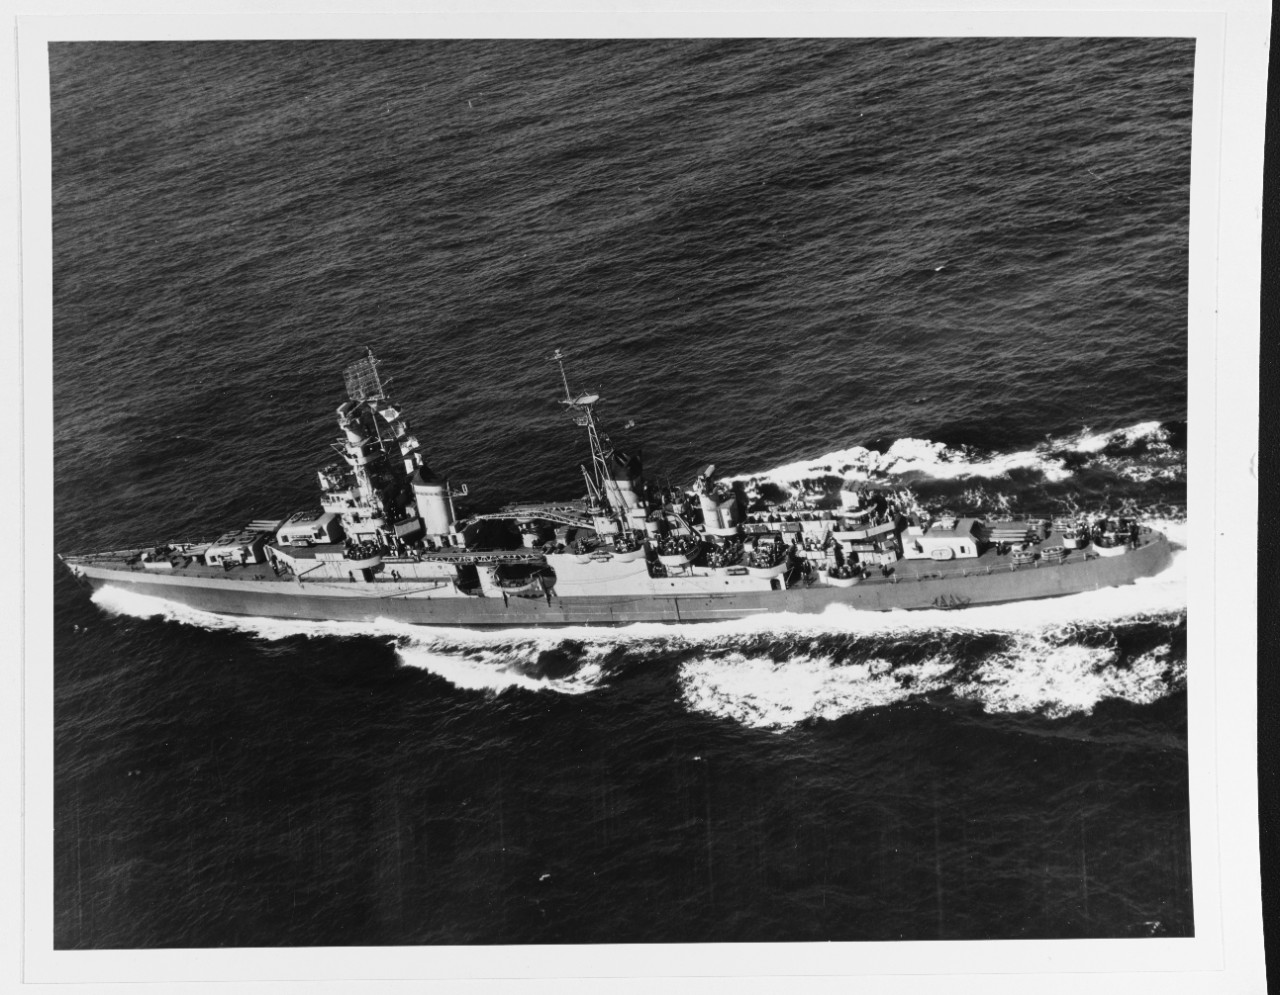 USS AUGUSTA (CA-31)